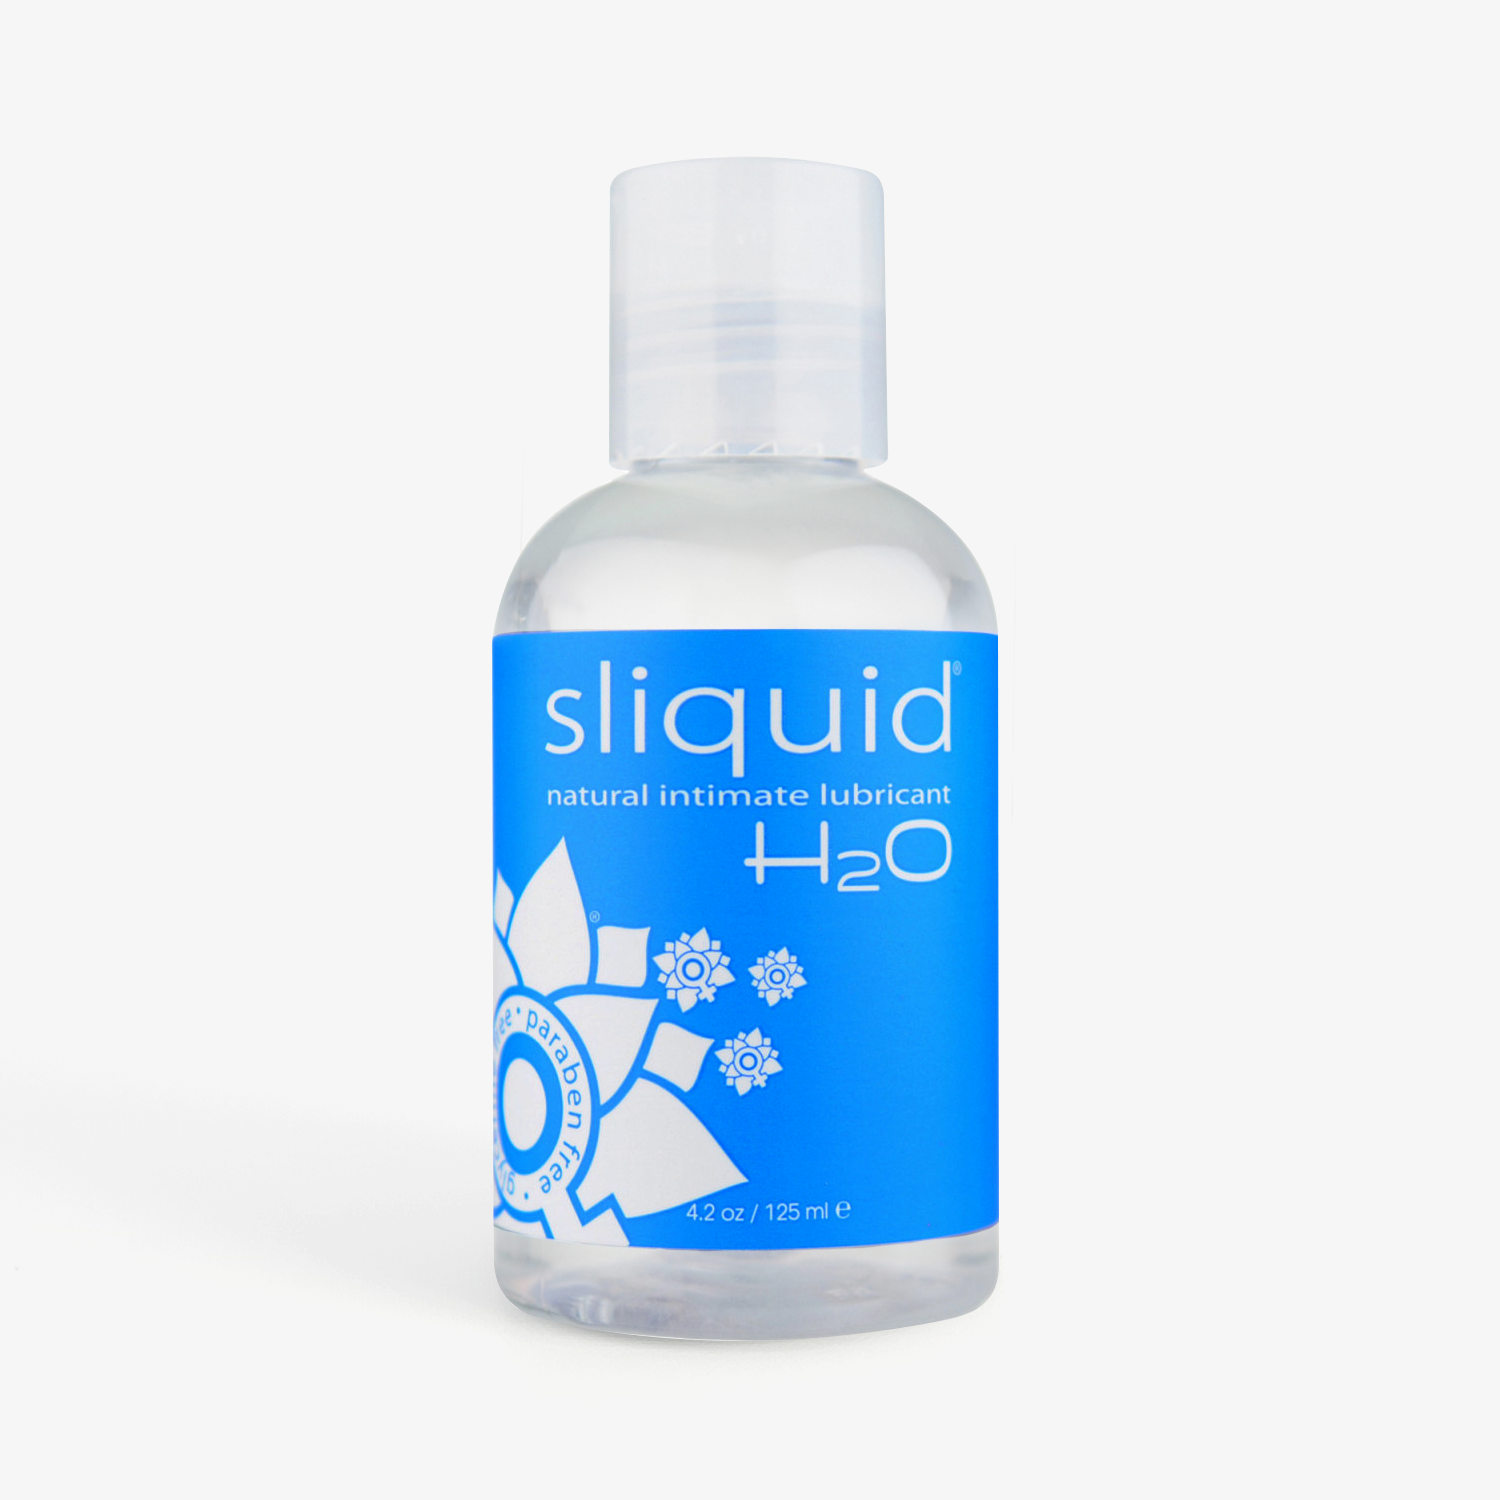 Lubrifiant à base d'eau original Sliquid H2O 4,2 oz/125 ml